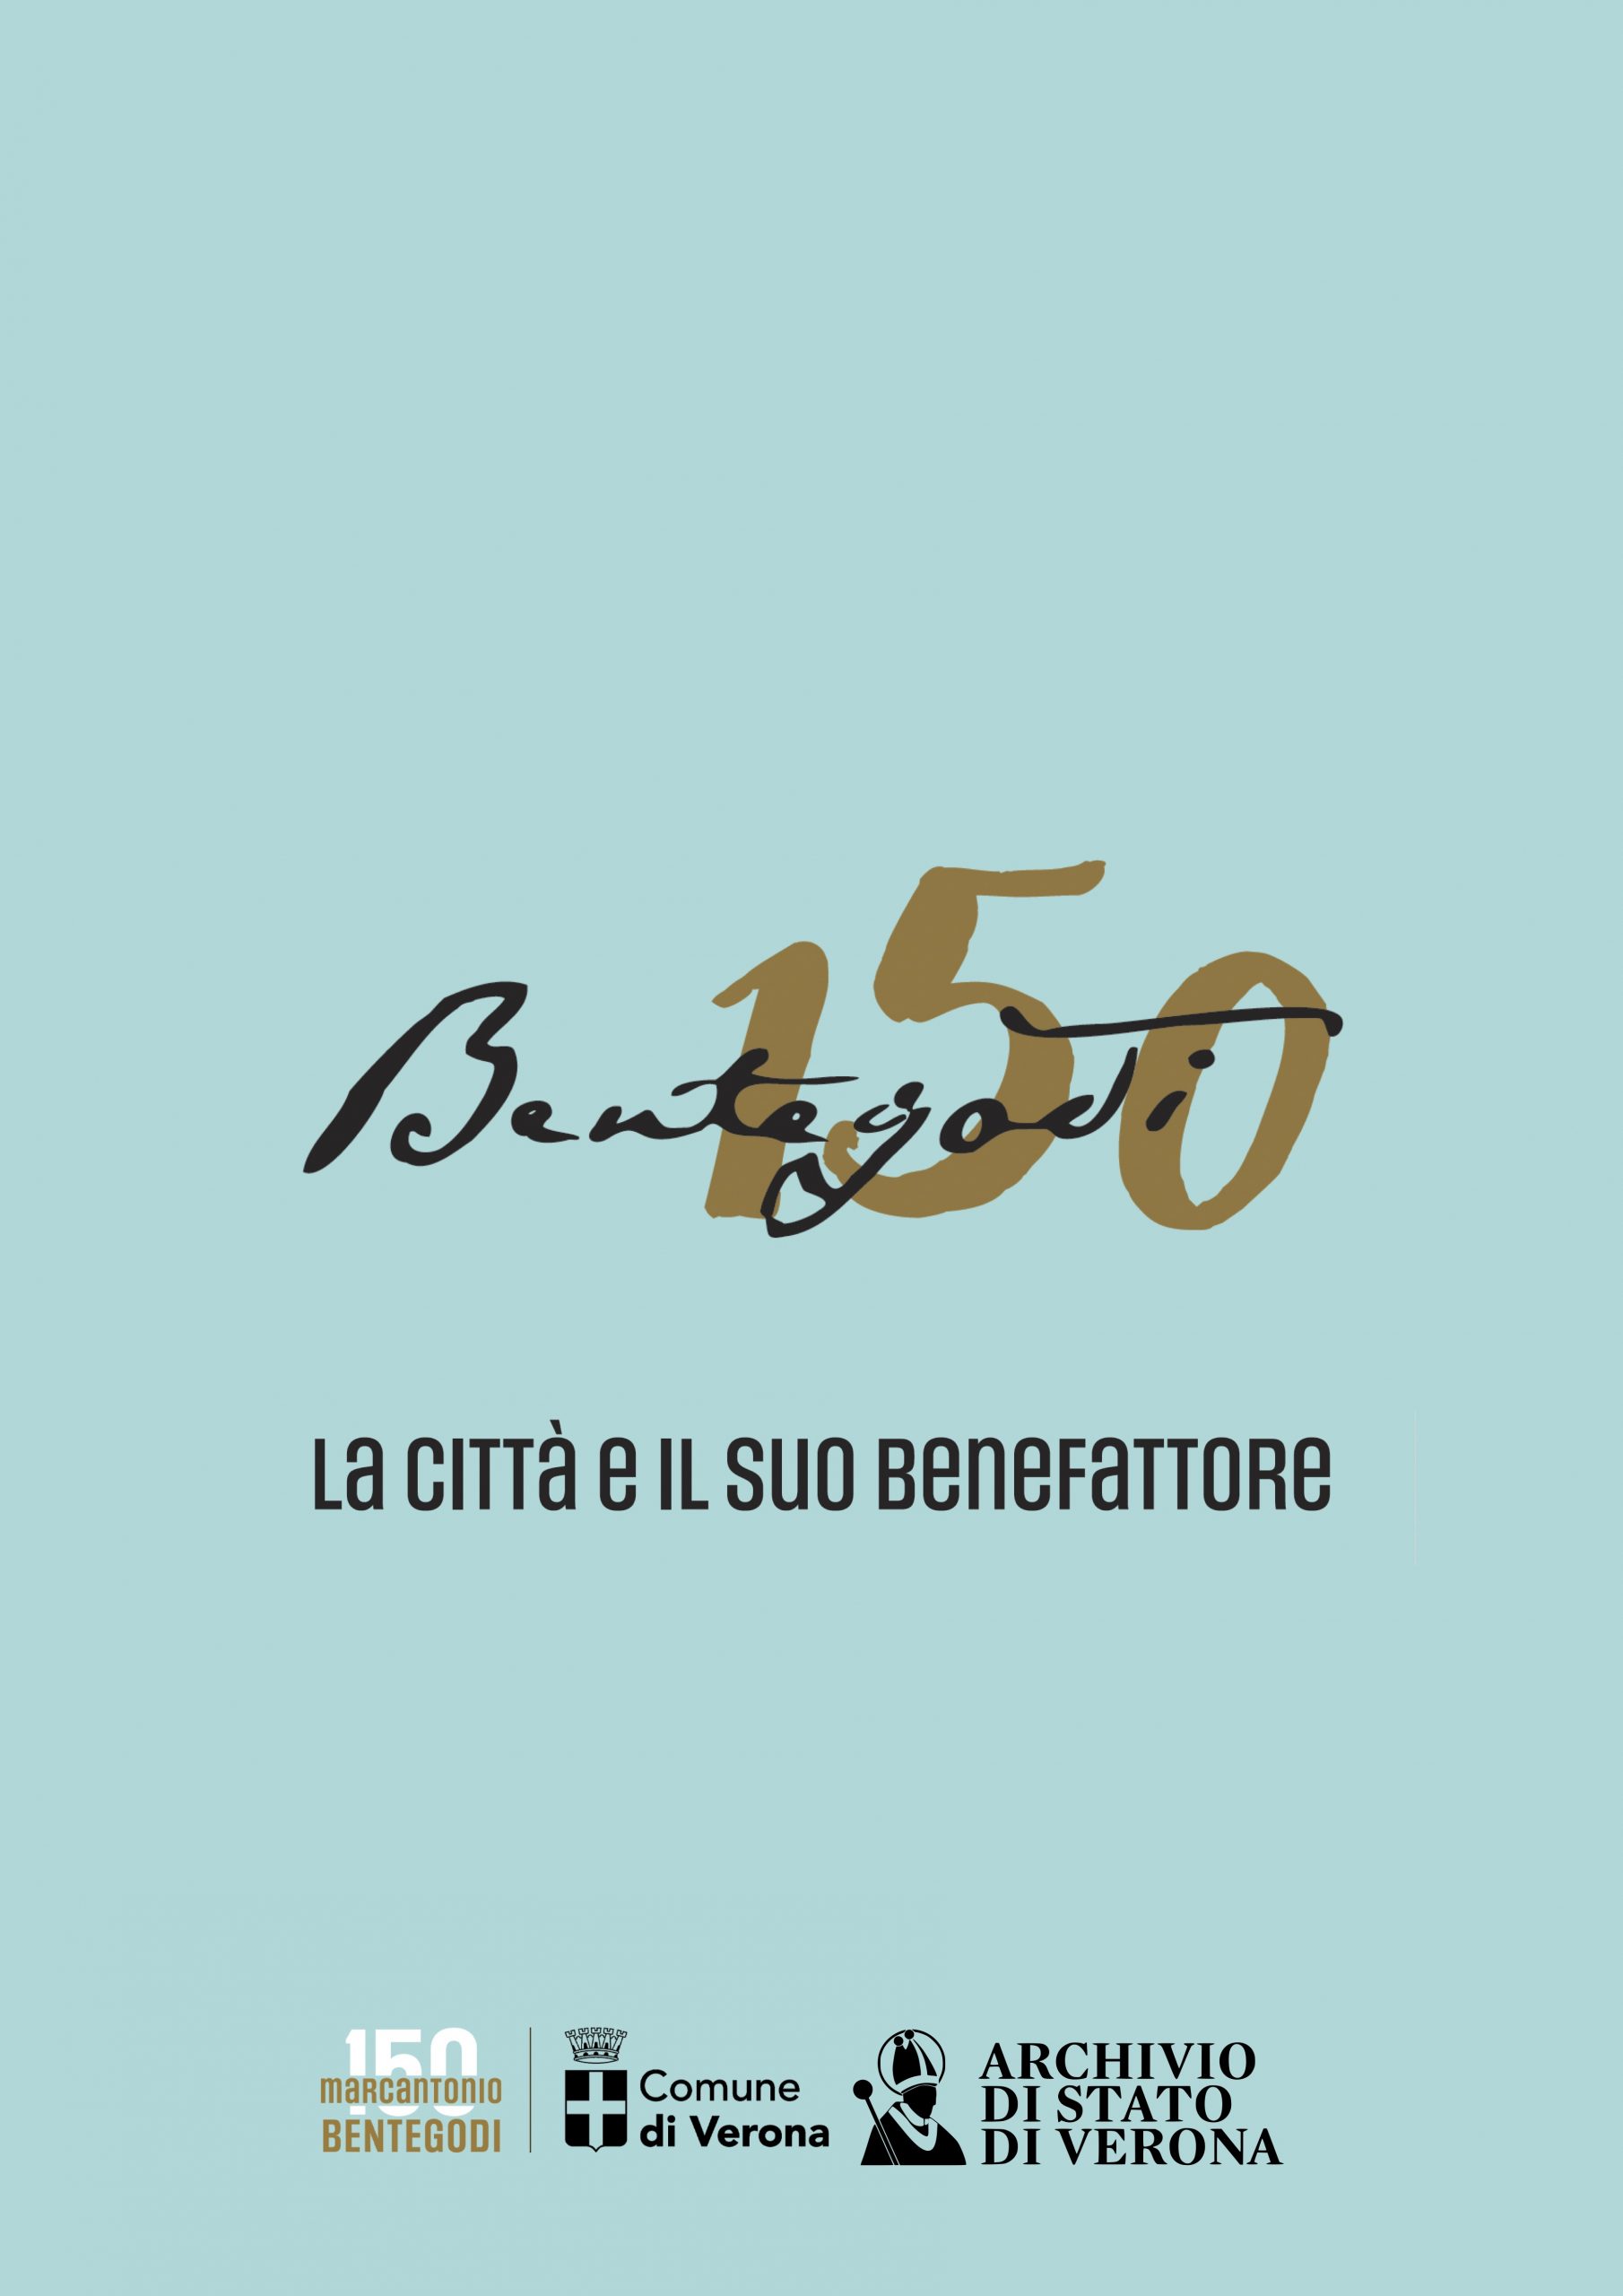 Al momento stai visualizzando Audiotour 150 Marcantonio Bentegodi